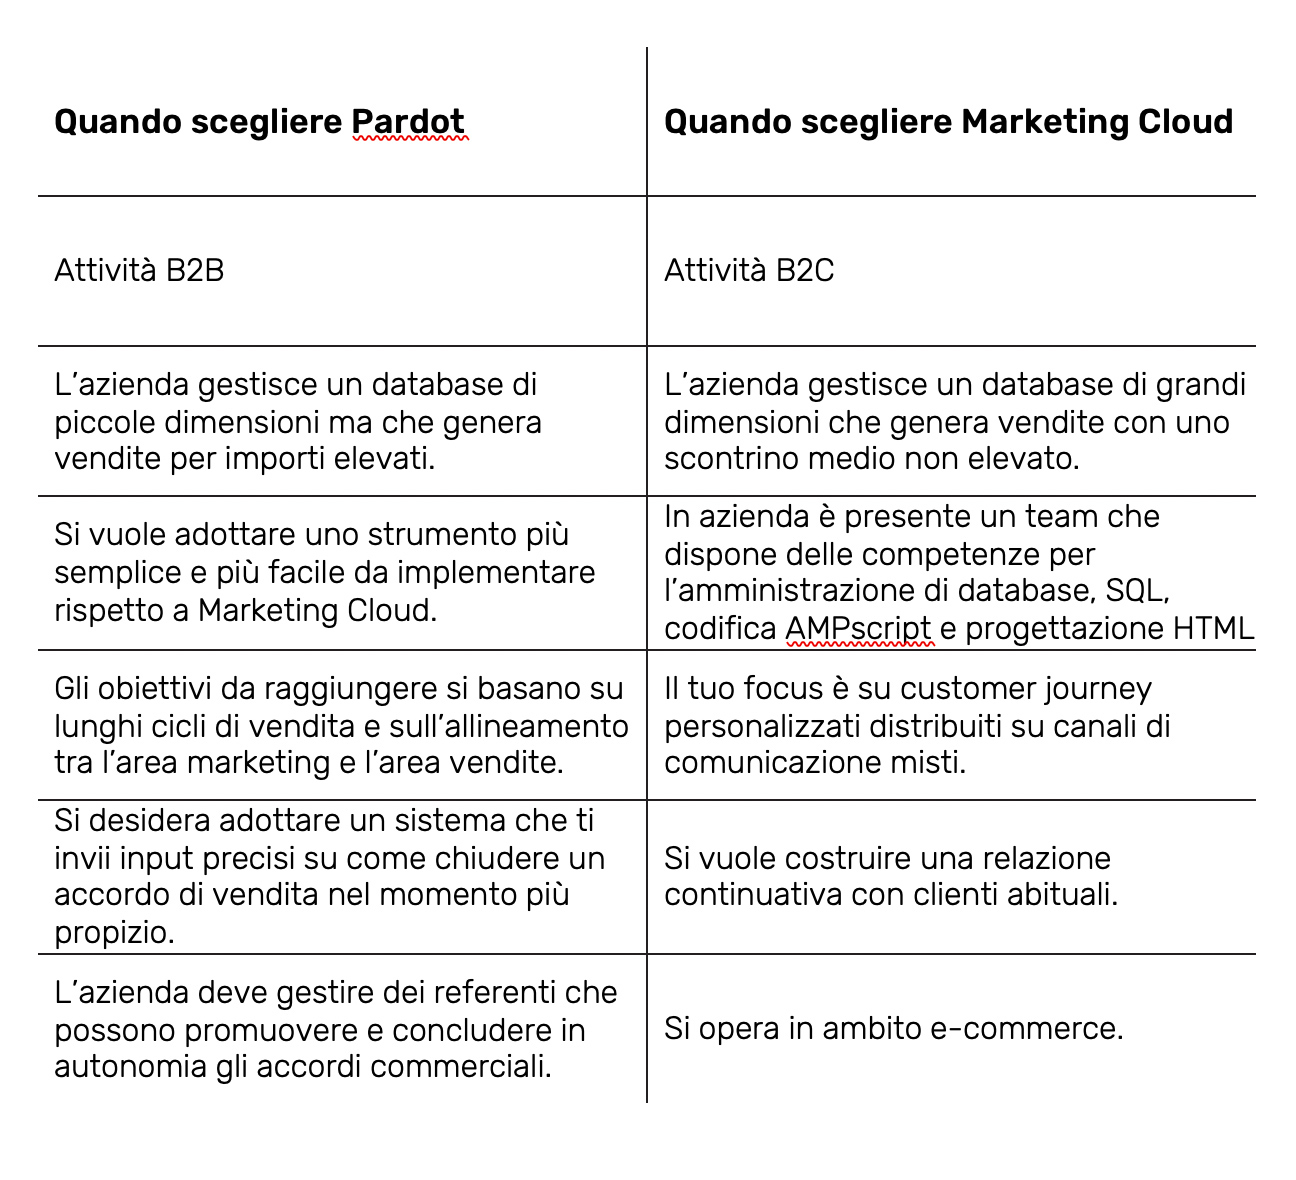 Salesforce - Pardot e Marketing cloud